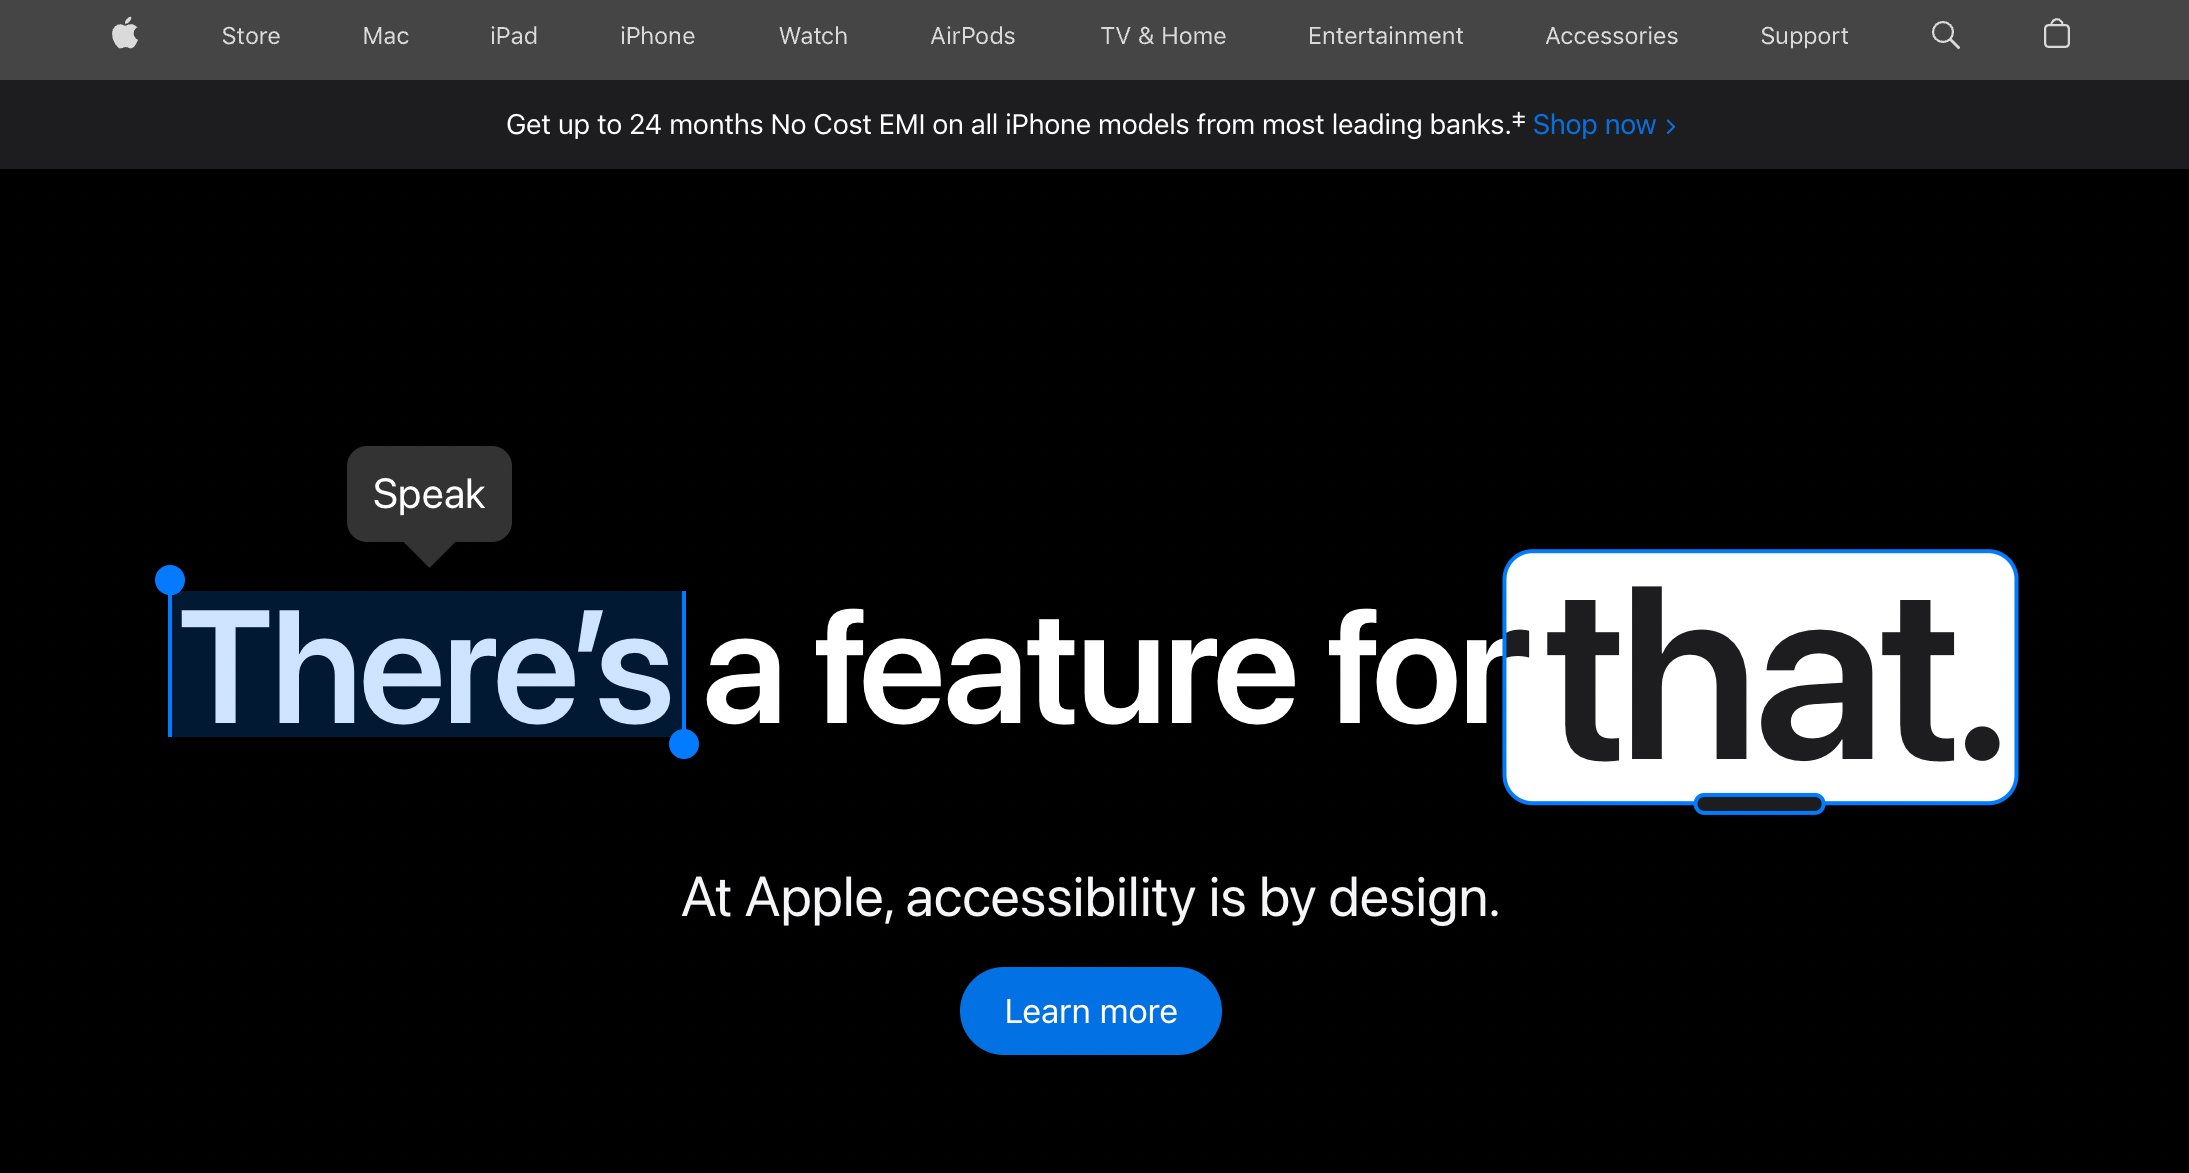 Apple's homepage